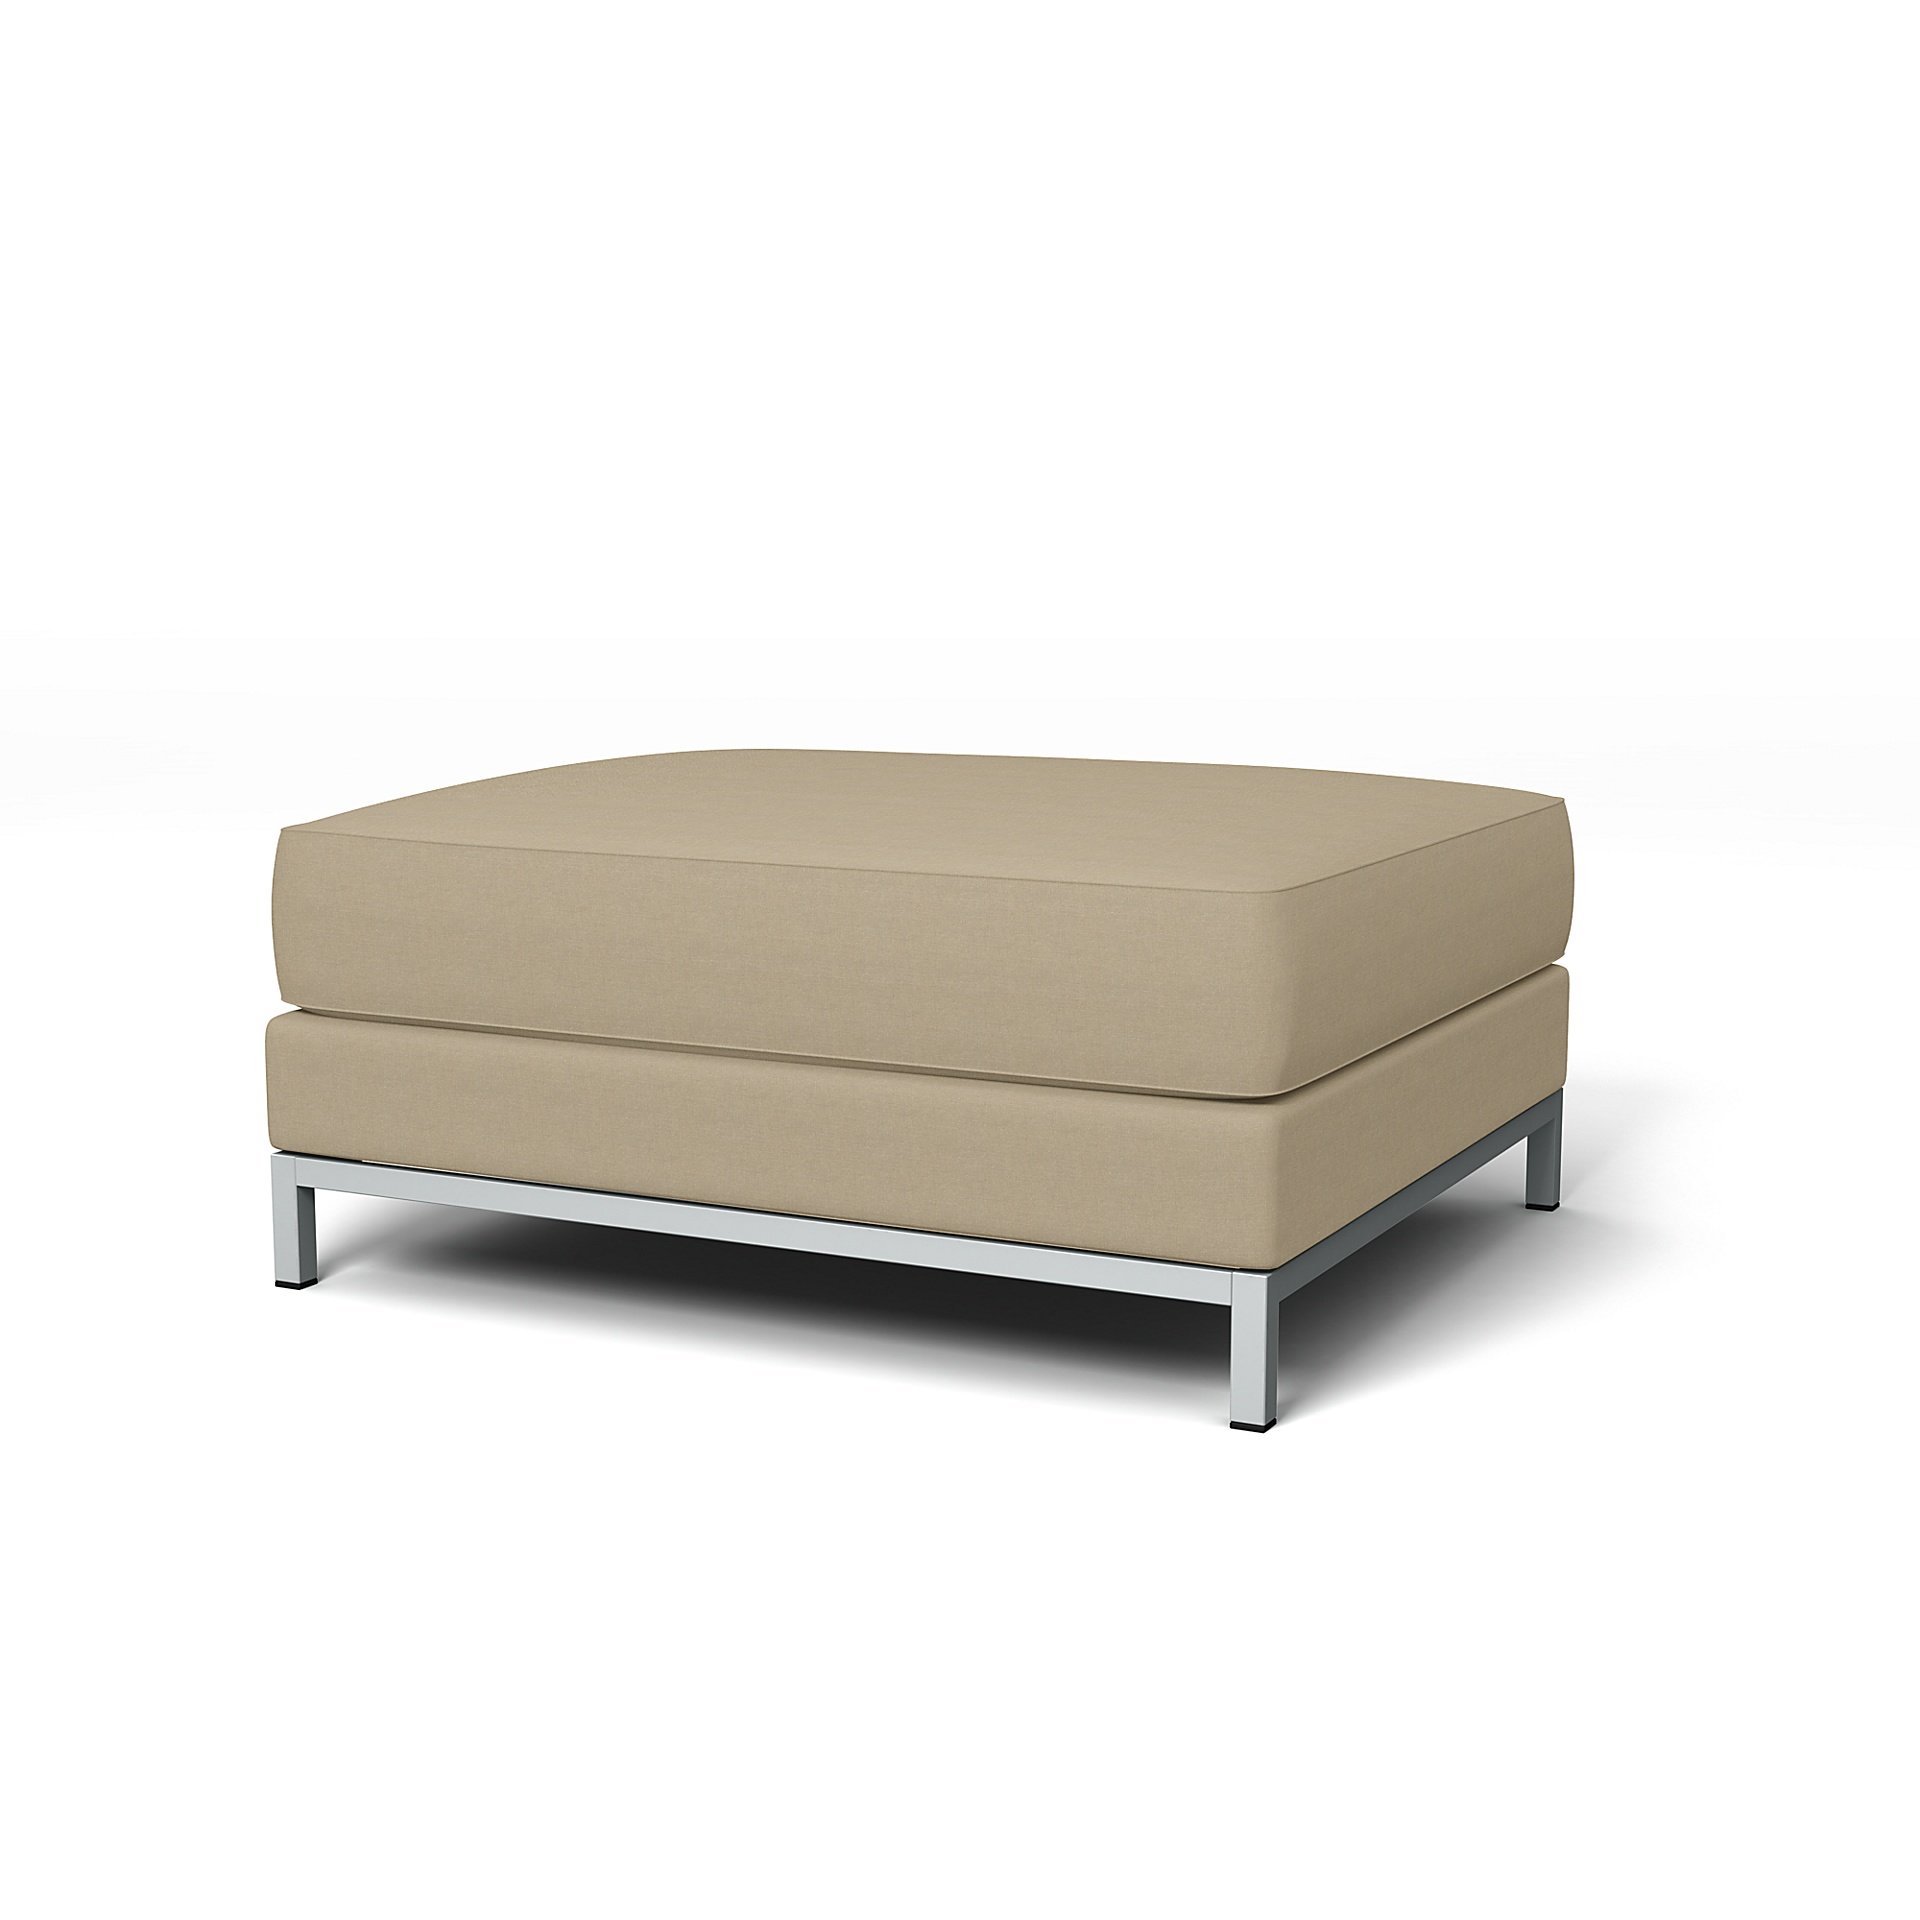 IKEA - Kramfors Footstool Cover, Tan, Linen - Bemz